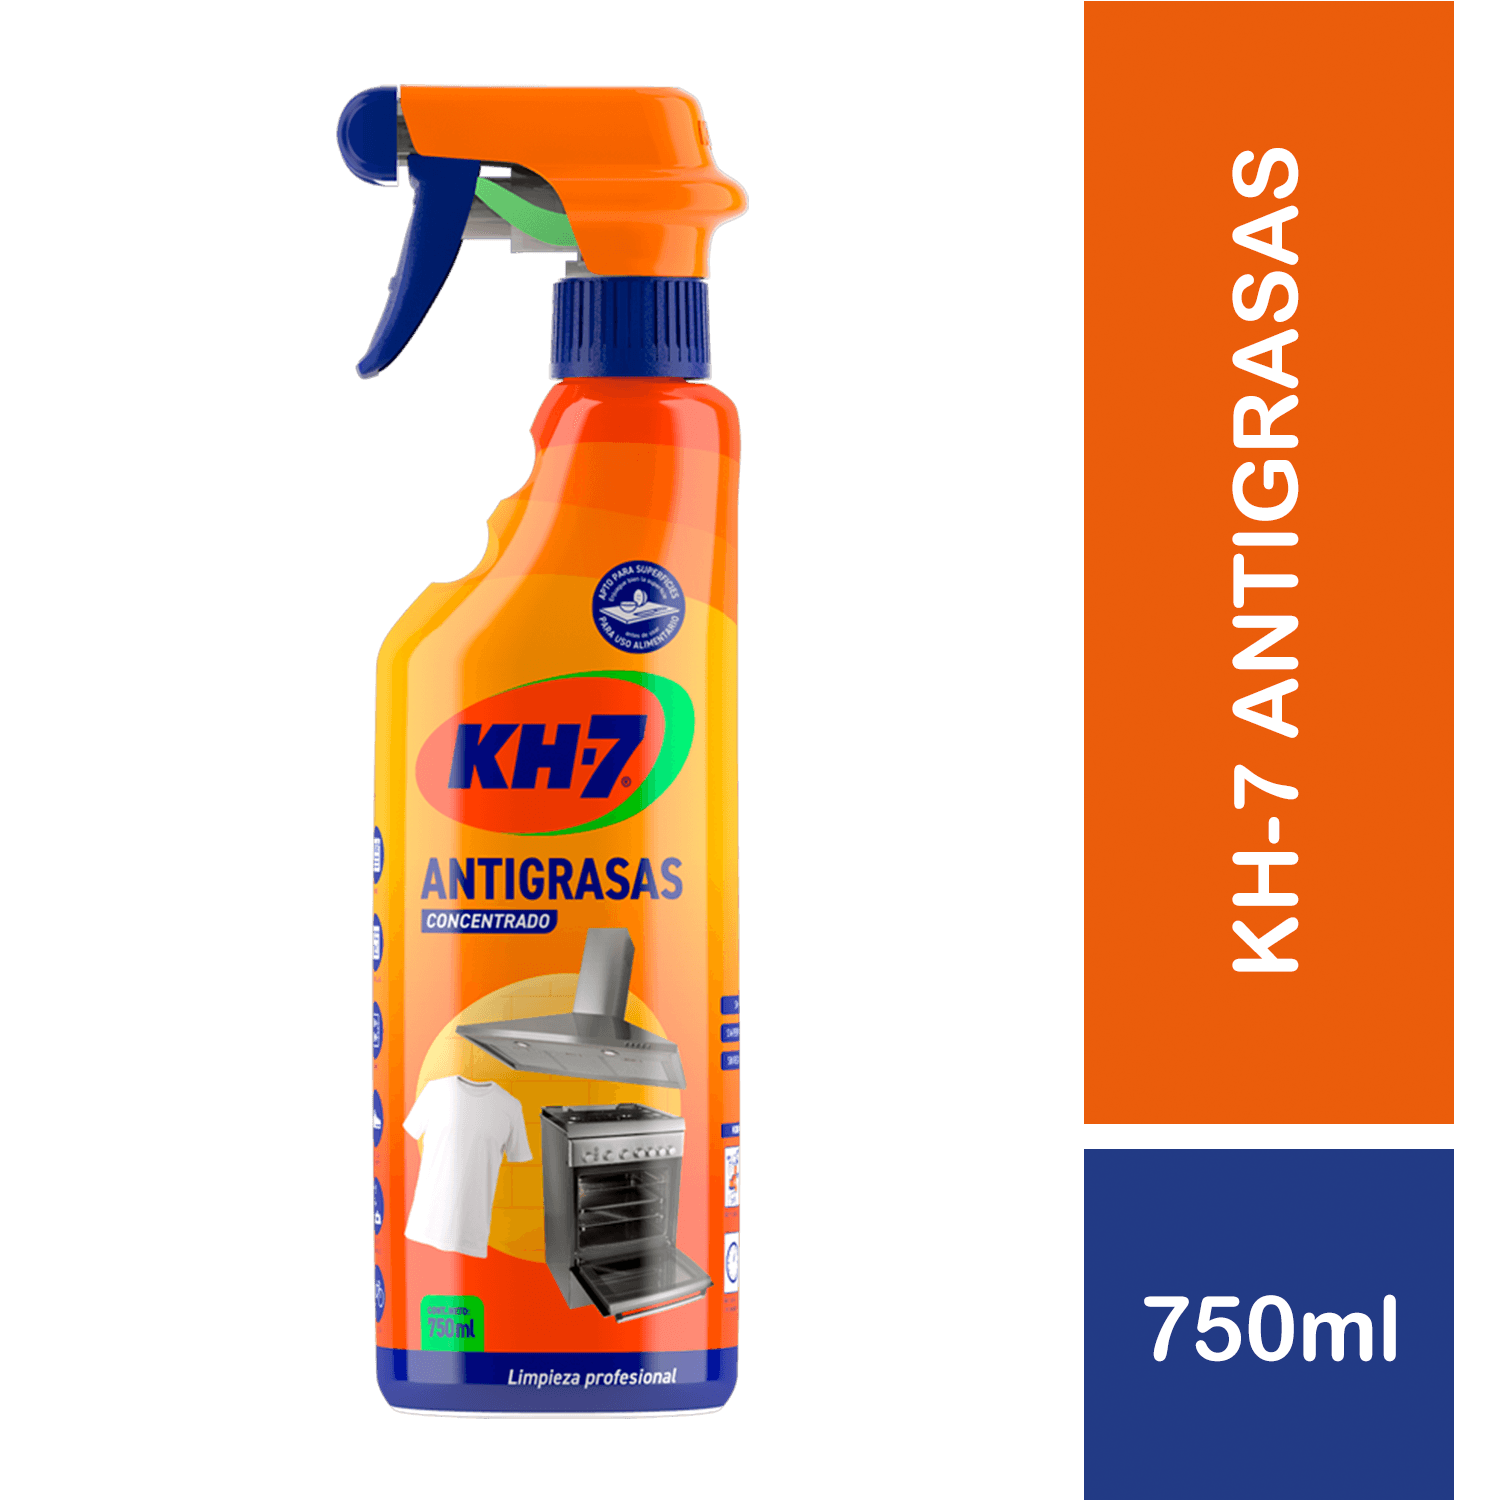 Limpiador desengrasante KH7 5L